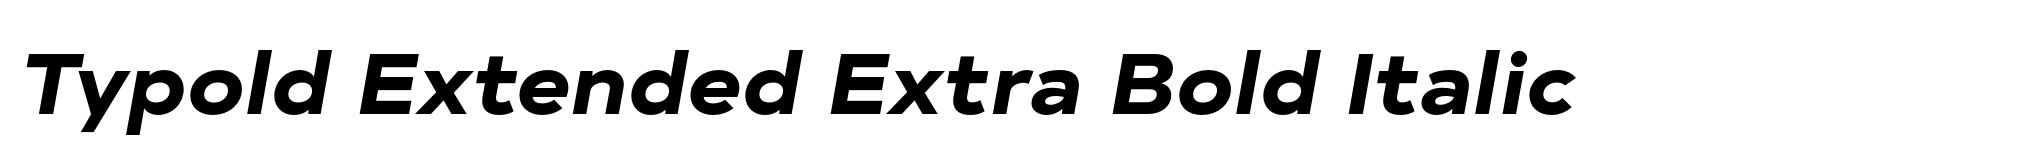 Typold Extended Extra Bold Italic image